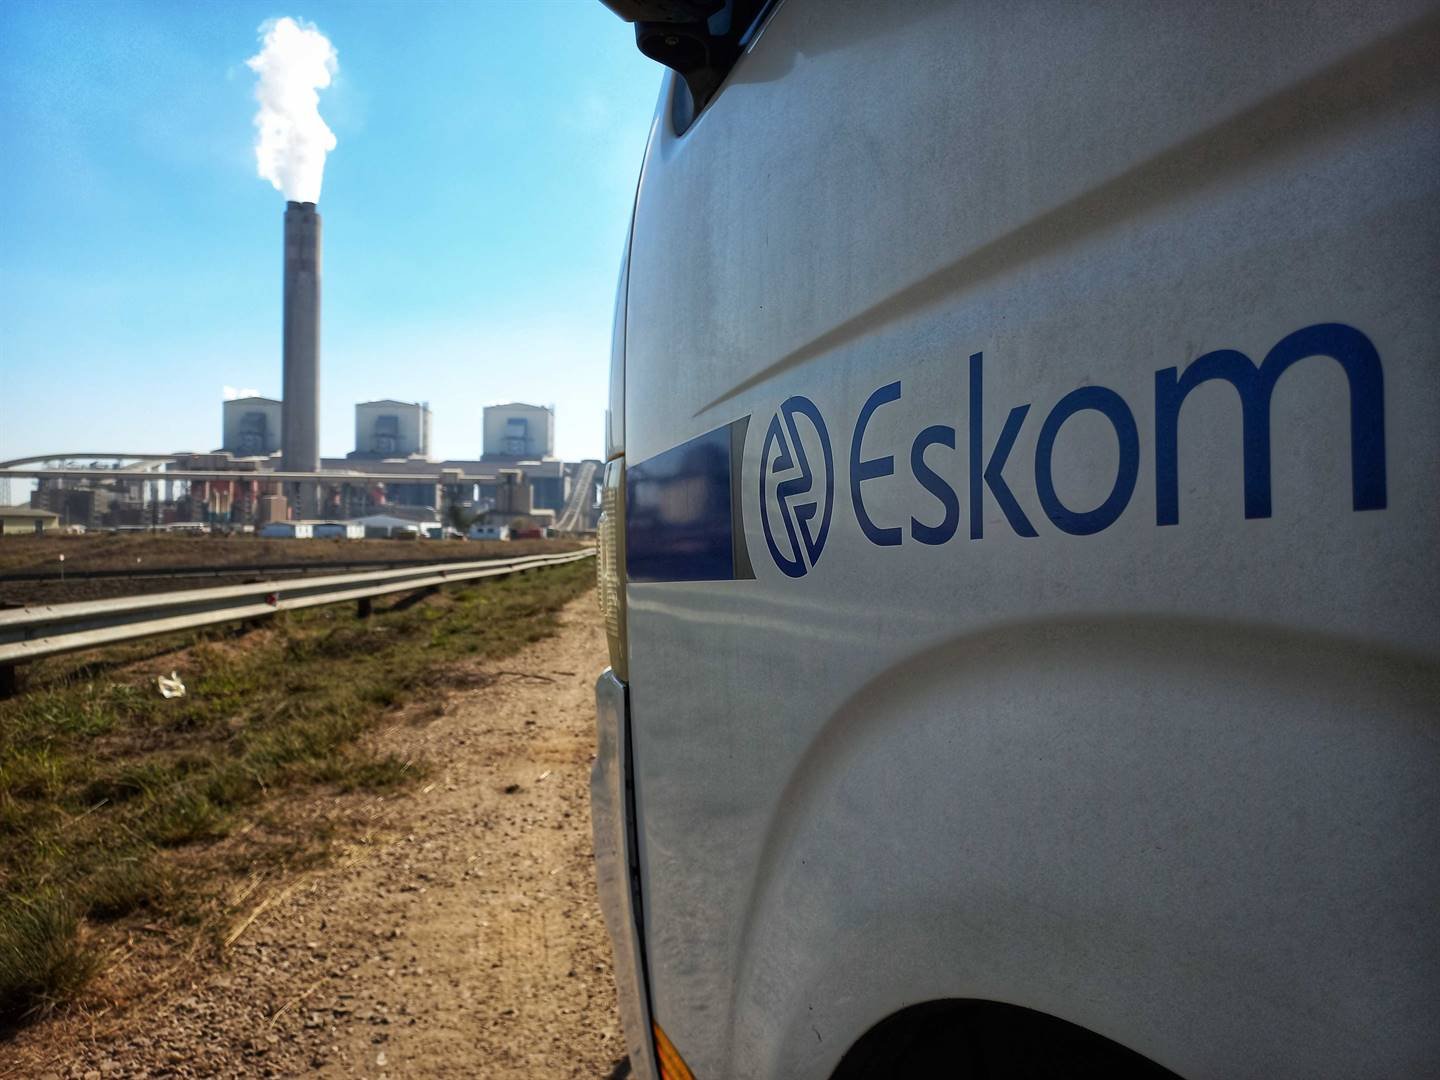 Eskom's load shedding crisis continues unabated.